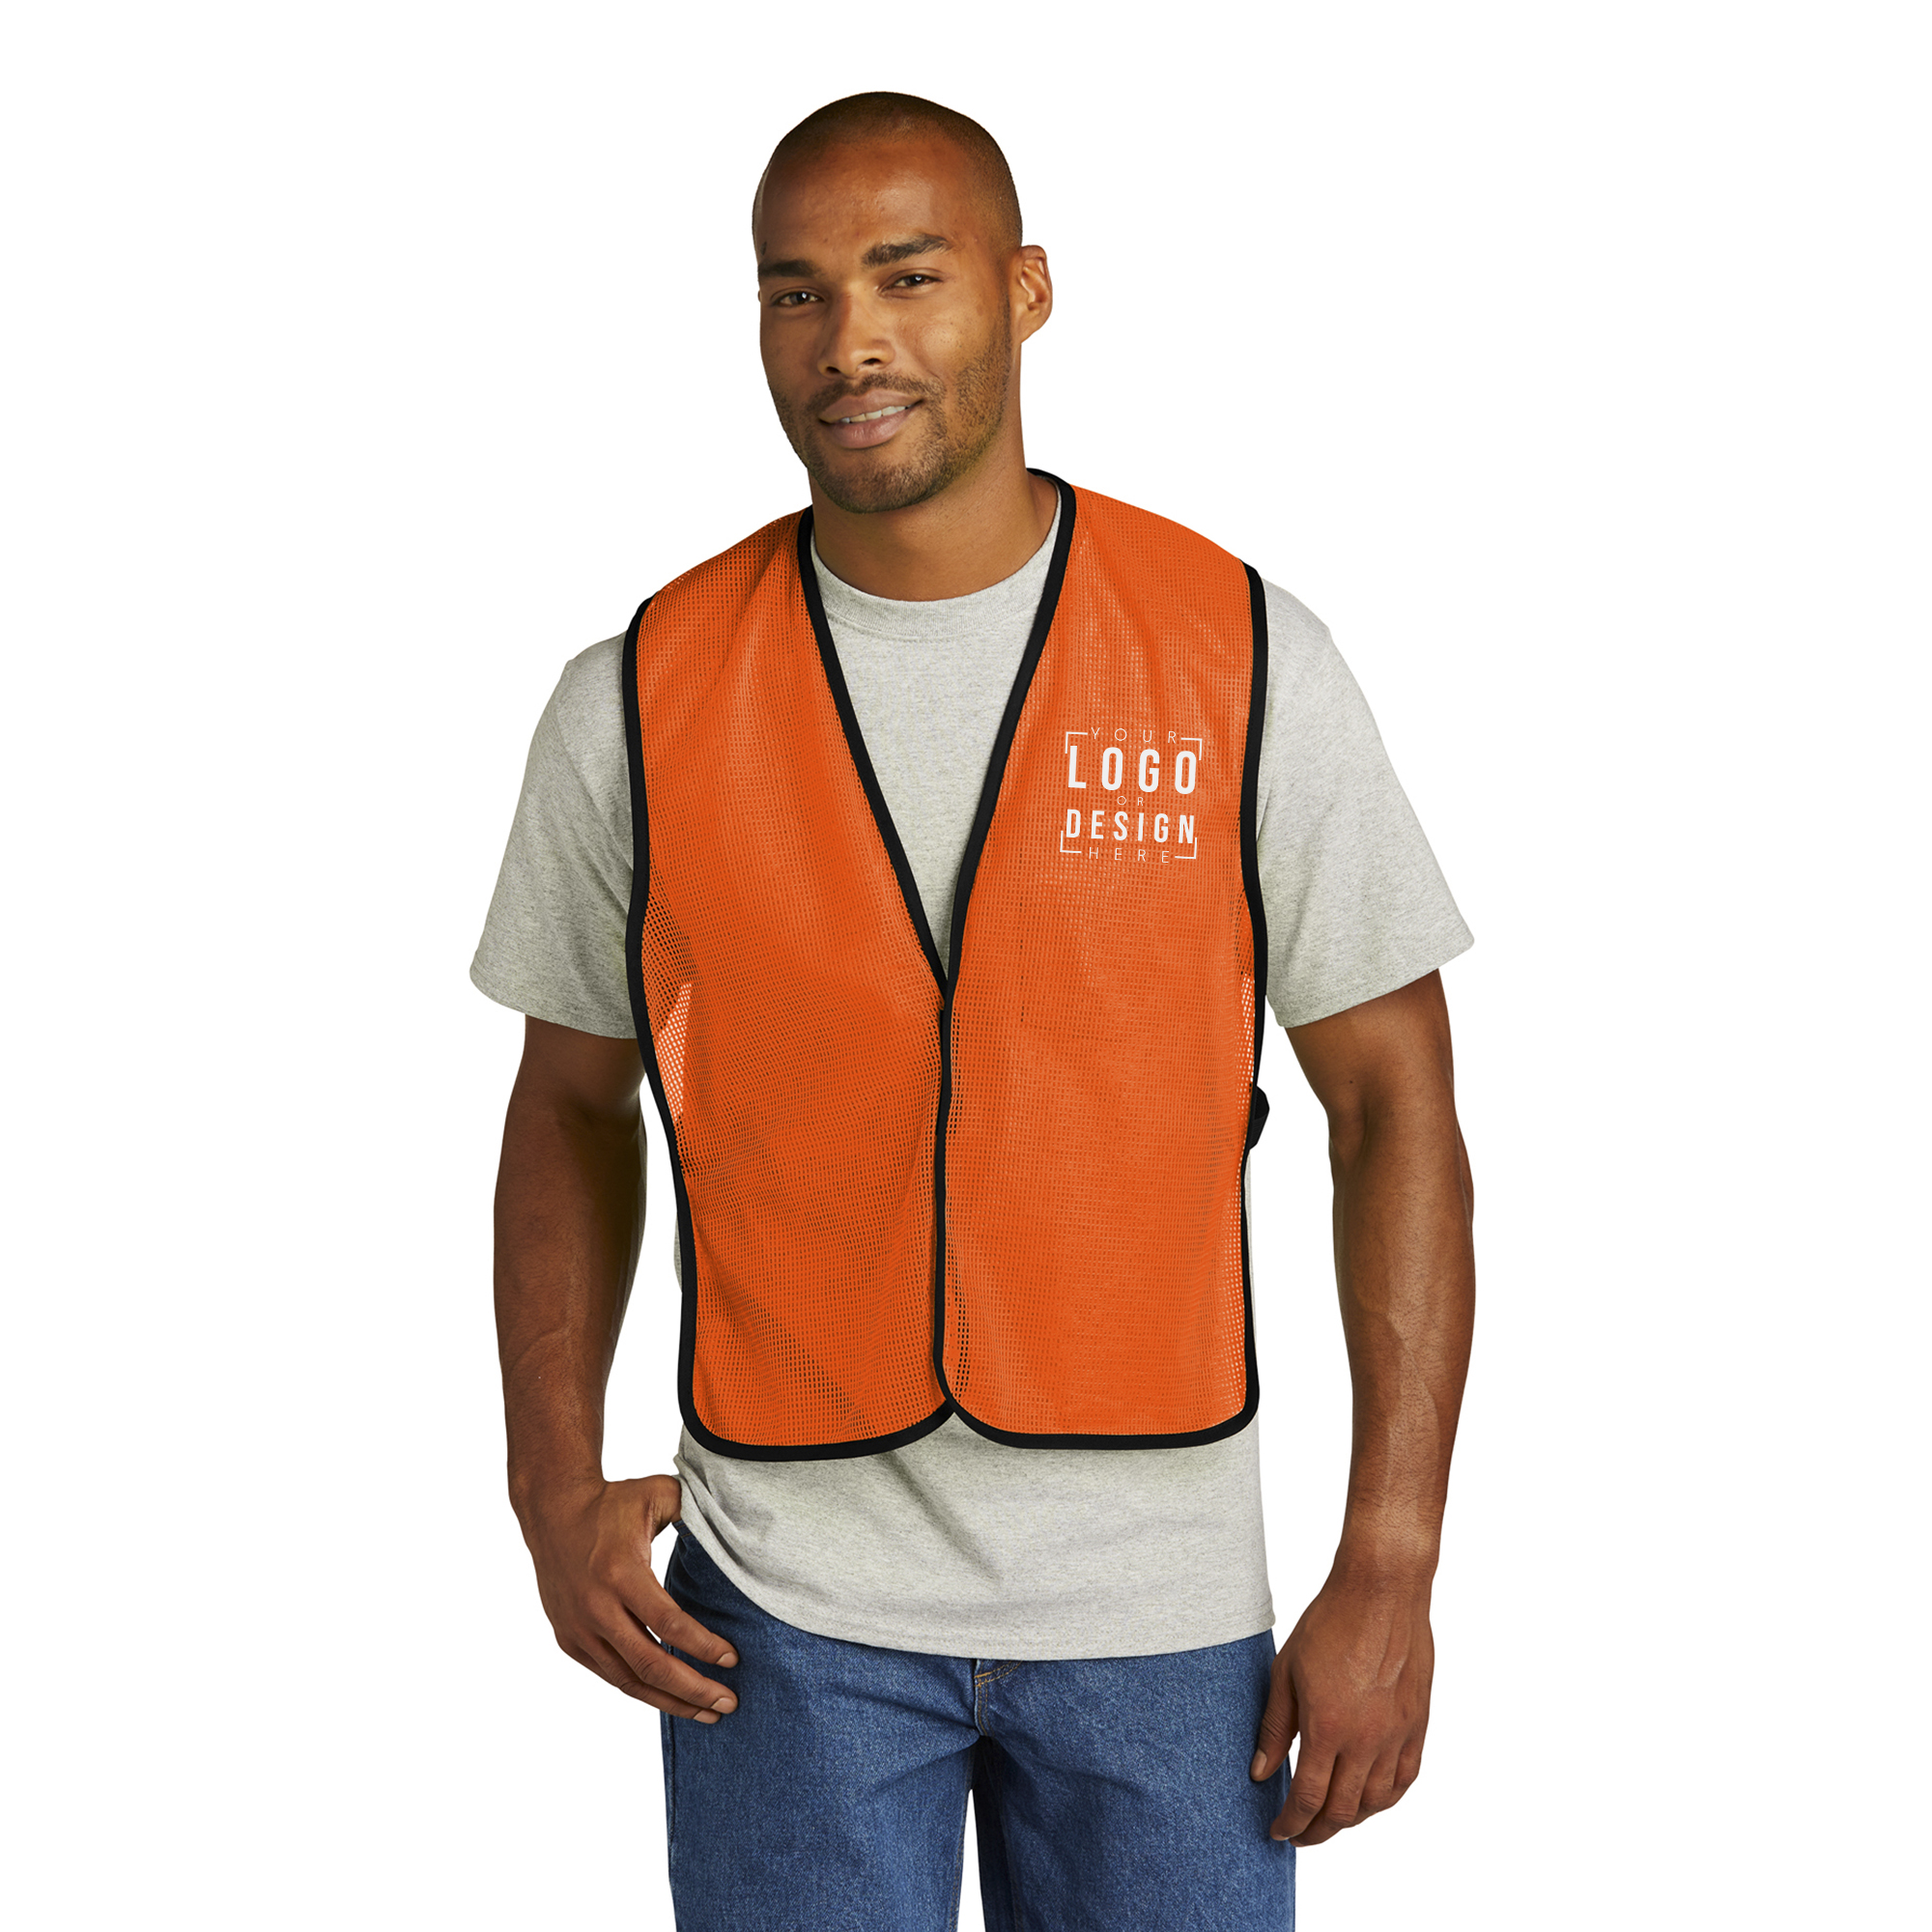 CornerStone Enhanced Visibility Mesh Vest.